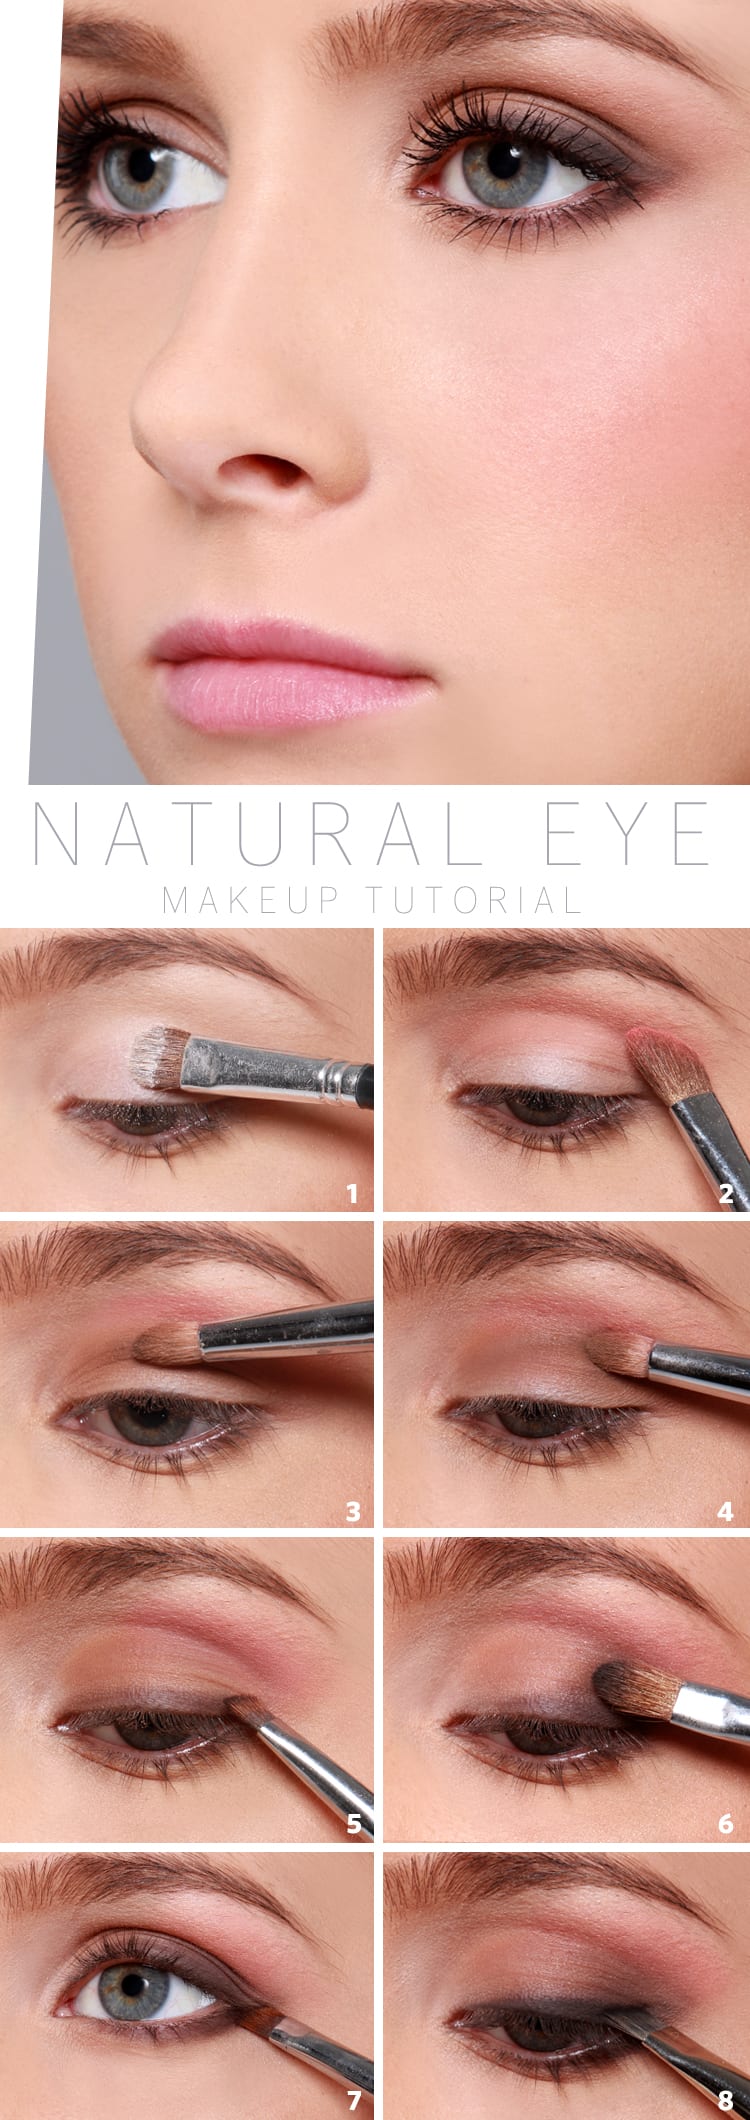 Lulus How-To: Natural Eye Makeup Tutorial - Fashion Blog